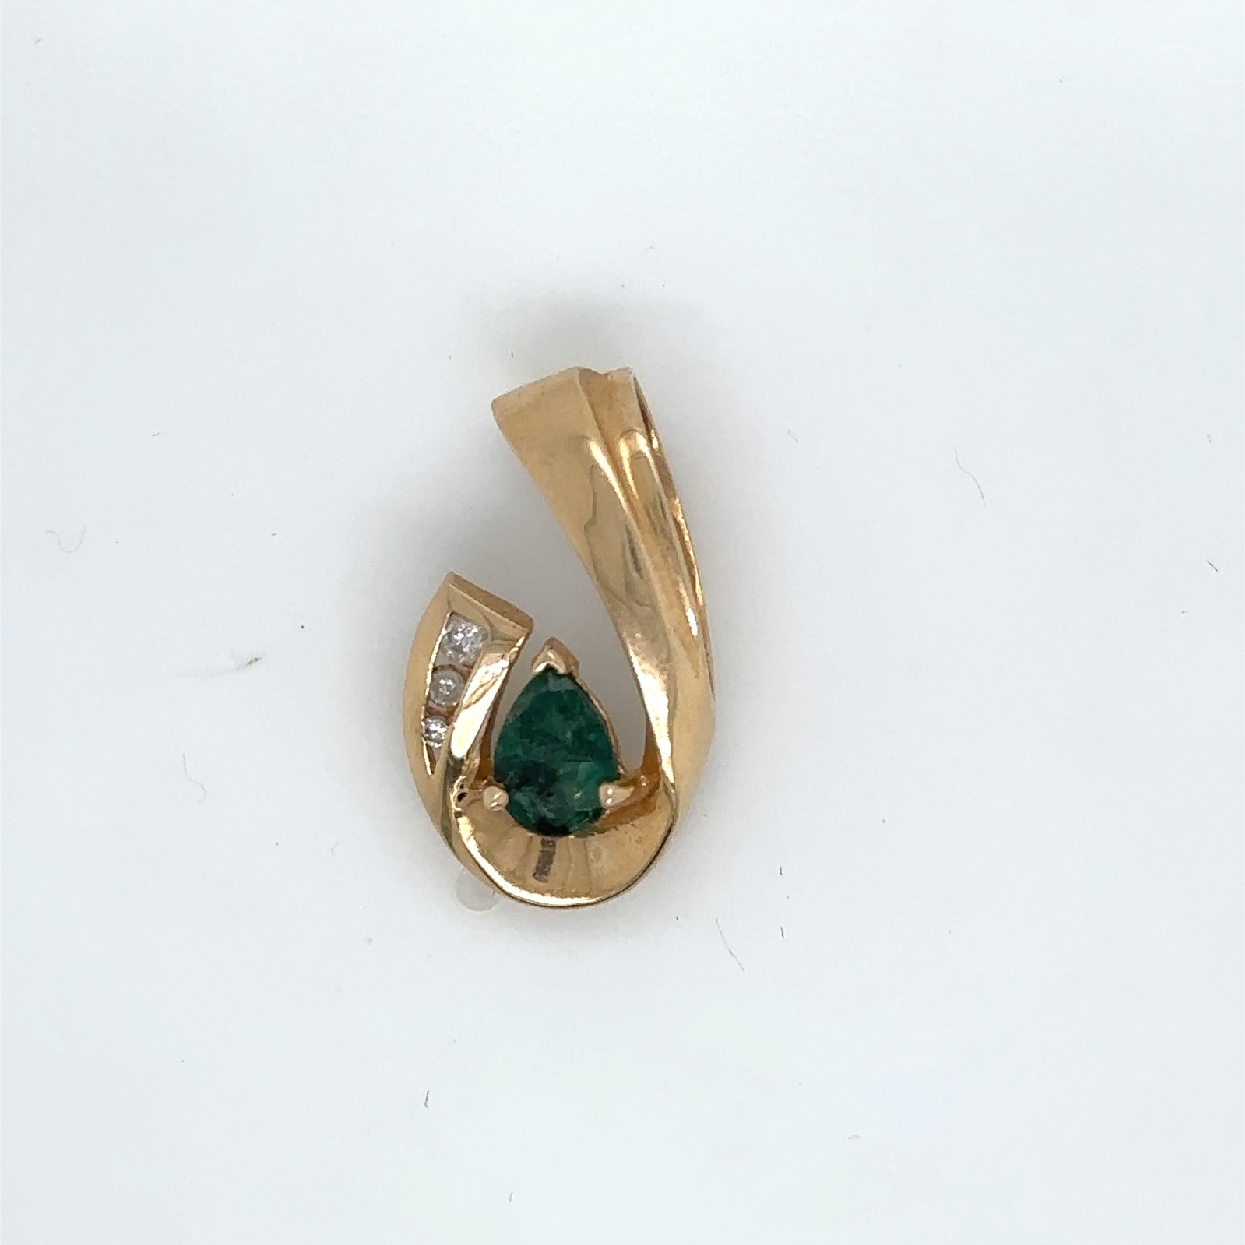 14K Yellow Gold Emerald Pendant with Channel Set Diamonds
0.80ct em; .08ct dia